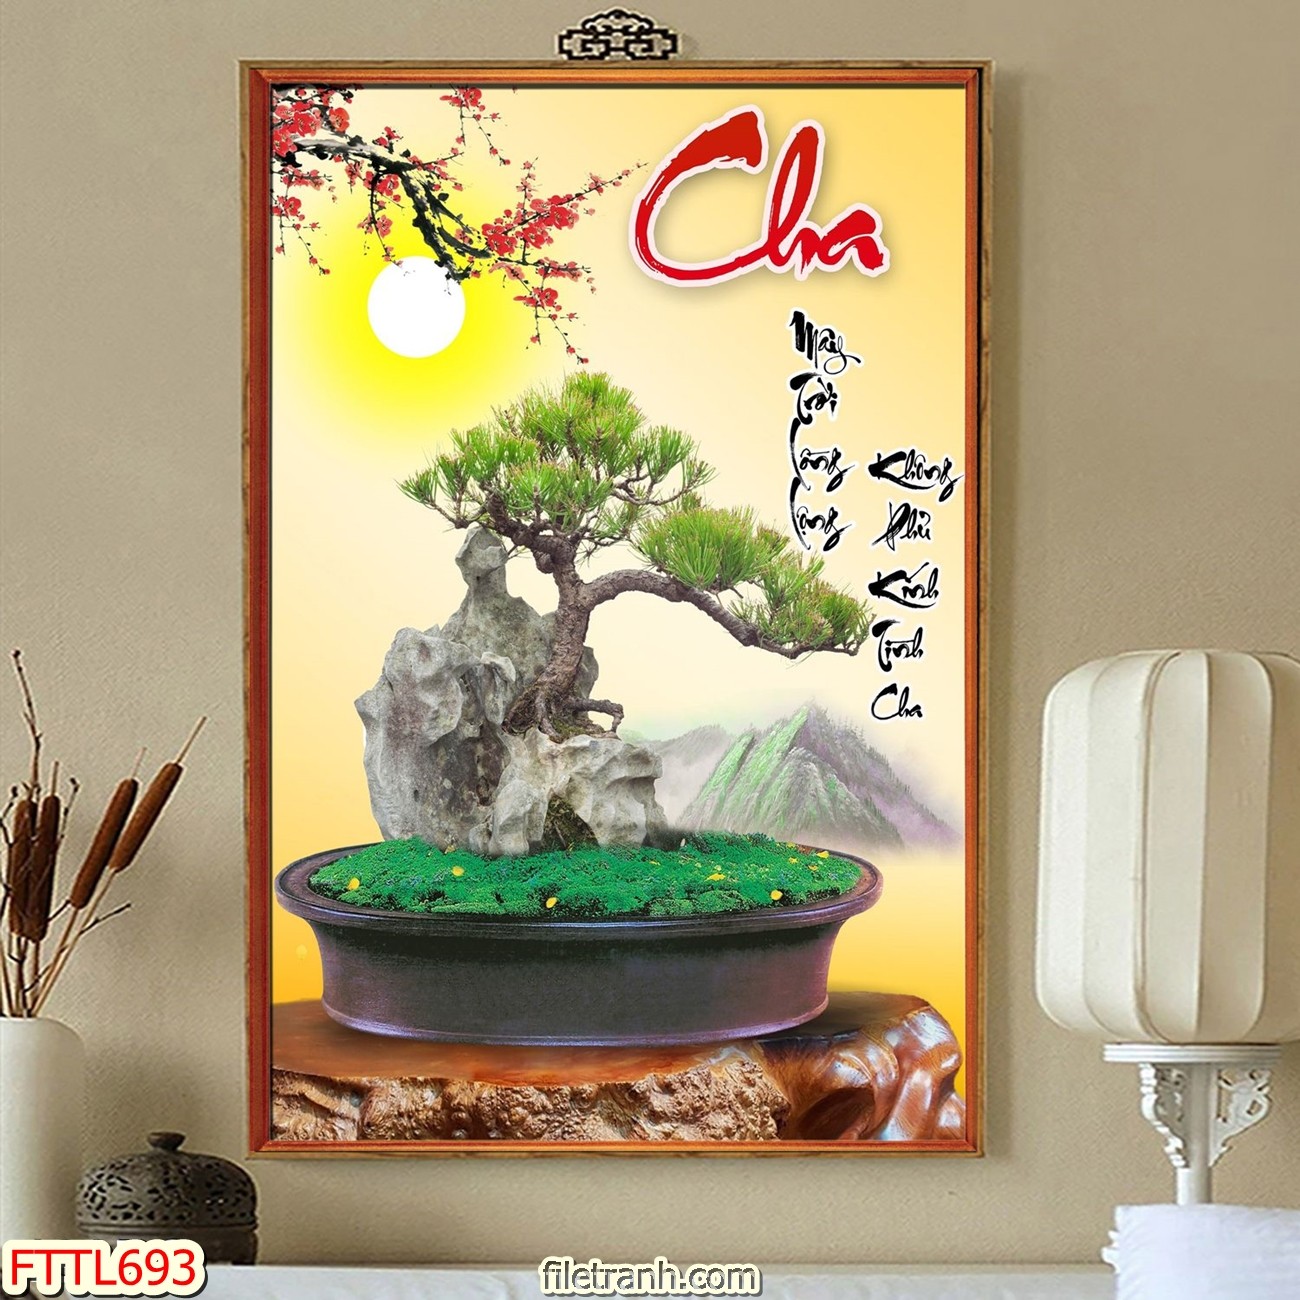 https://filetranh.com/file-tranh-chau-mai-bonsai/file-tranh-chau-mai-bonsai-fttl693.html